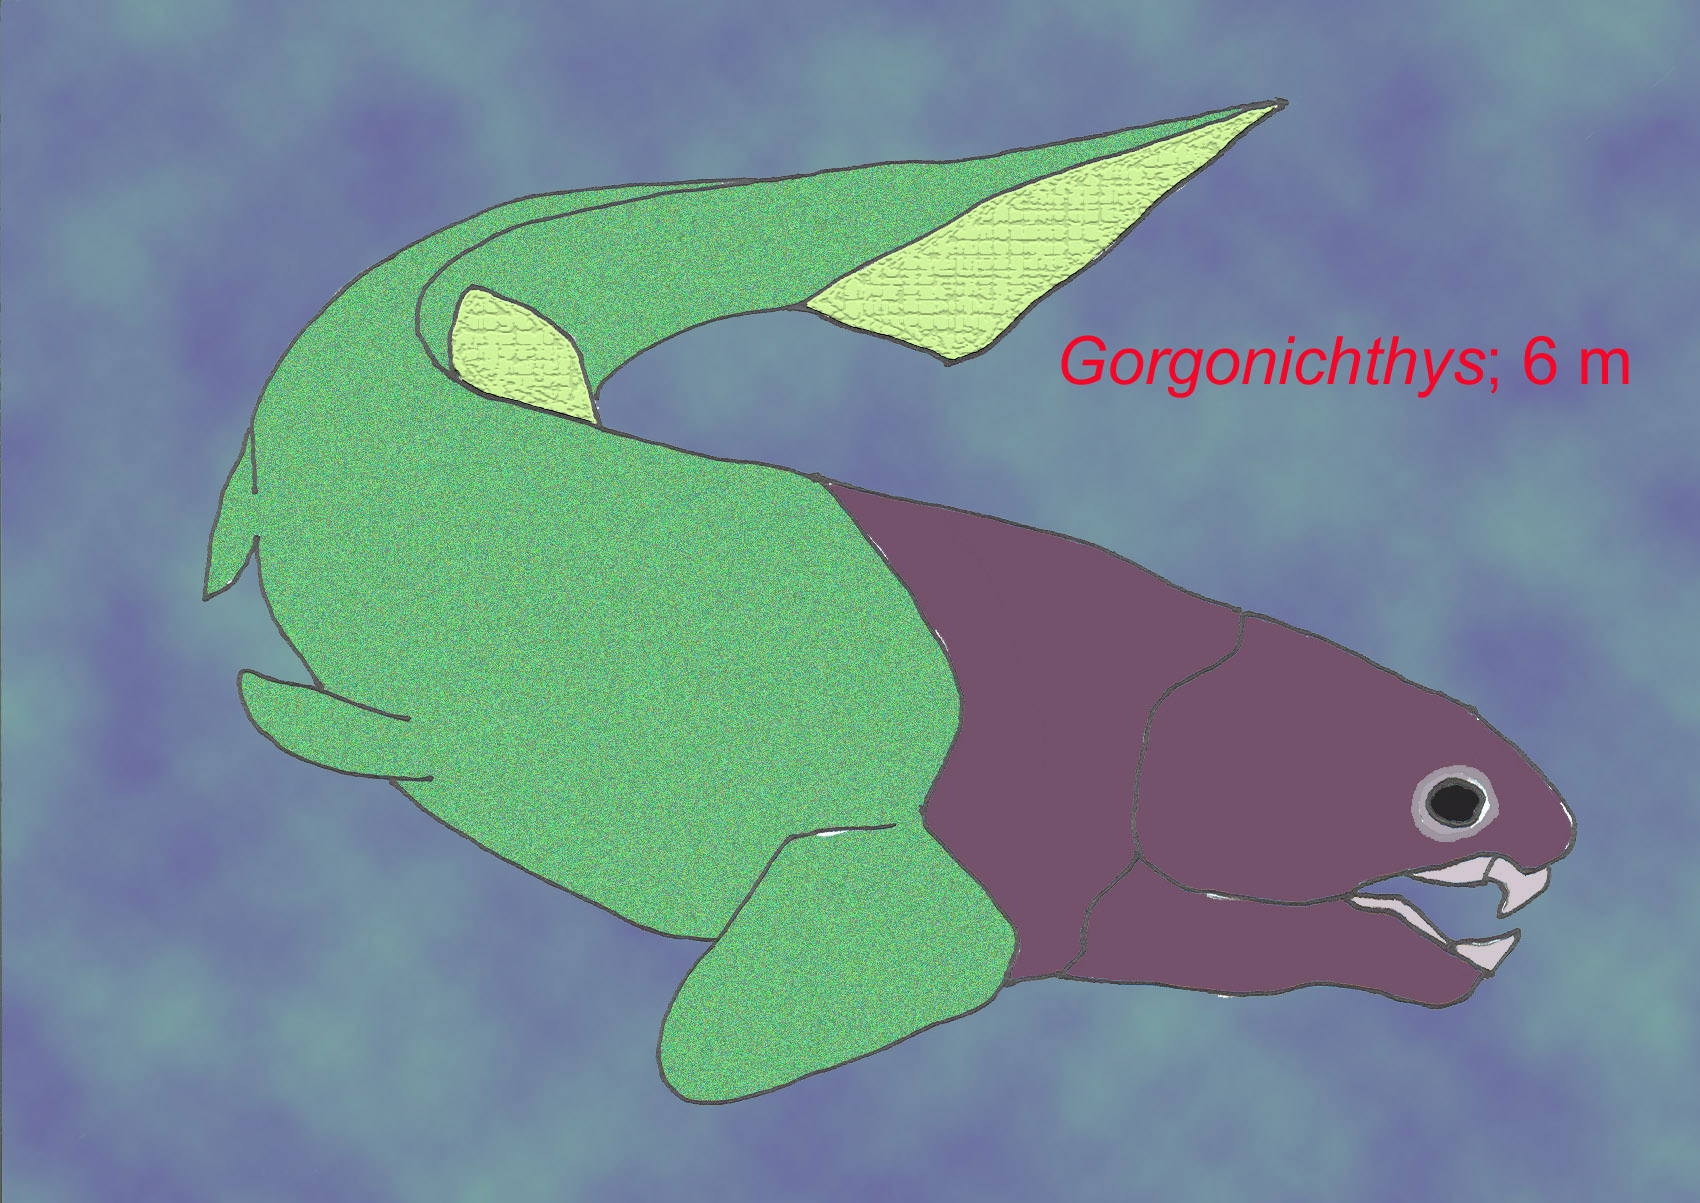 gorgonichthys 6 meters